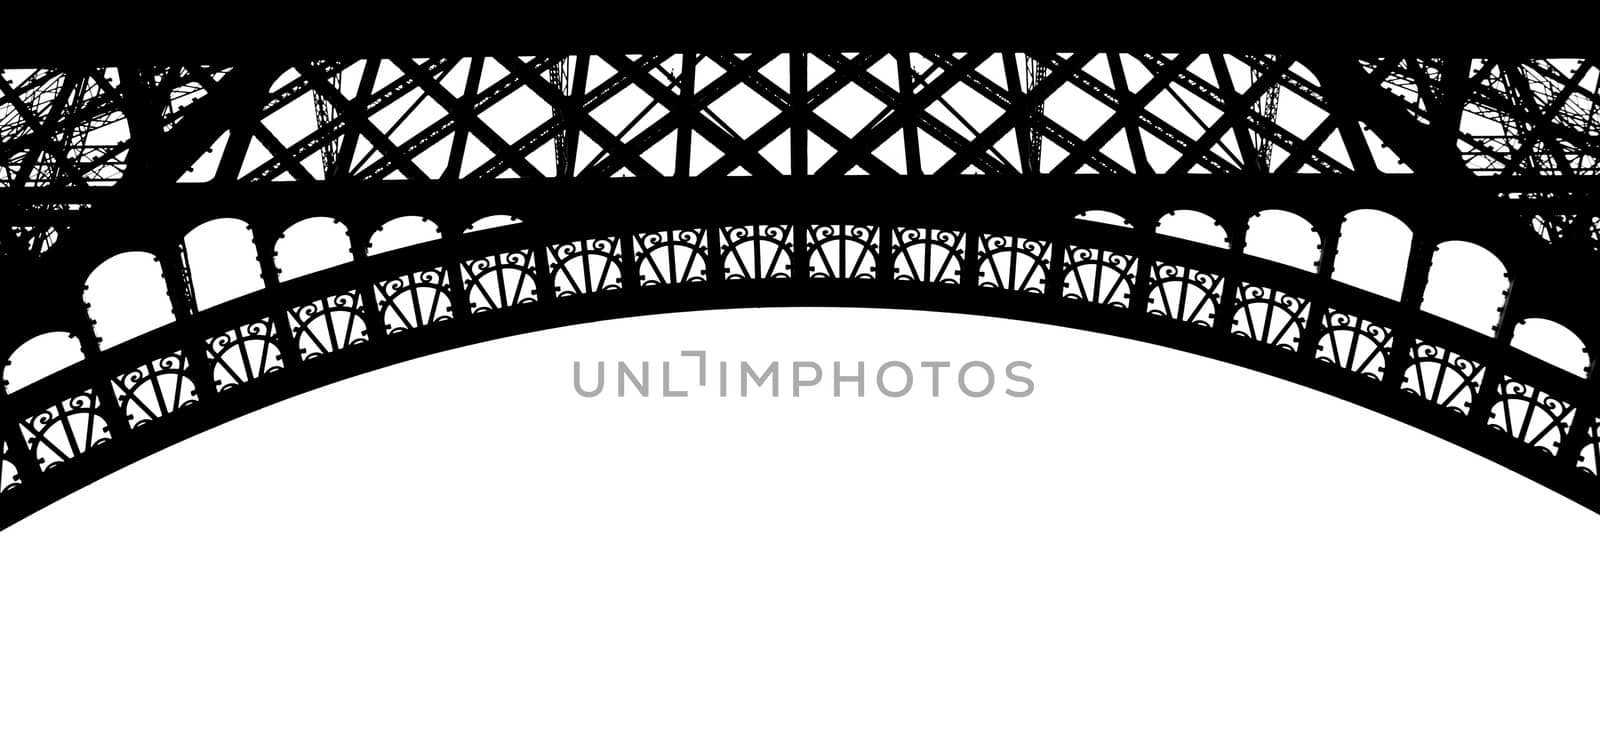 Paris, Eiffel Tower particular by goghy73